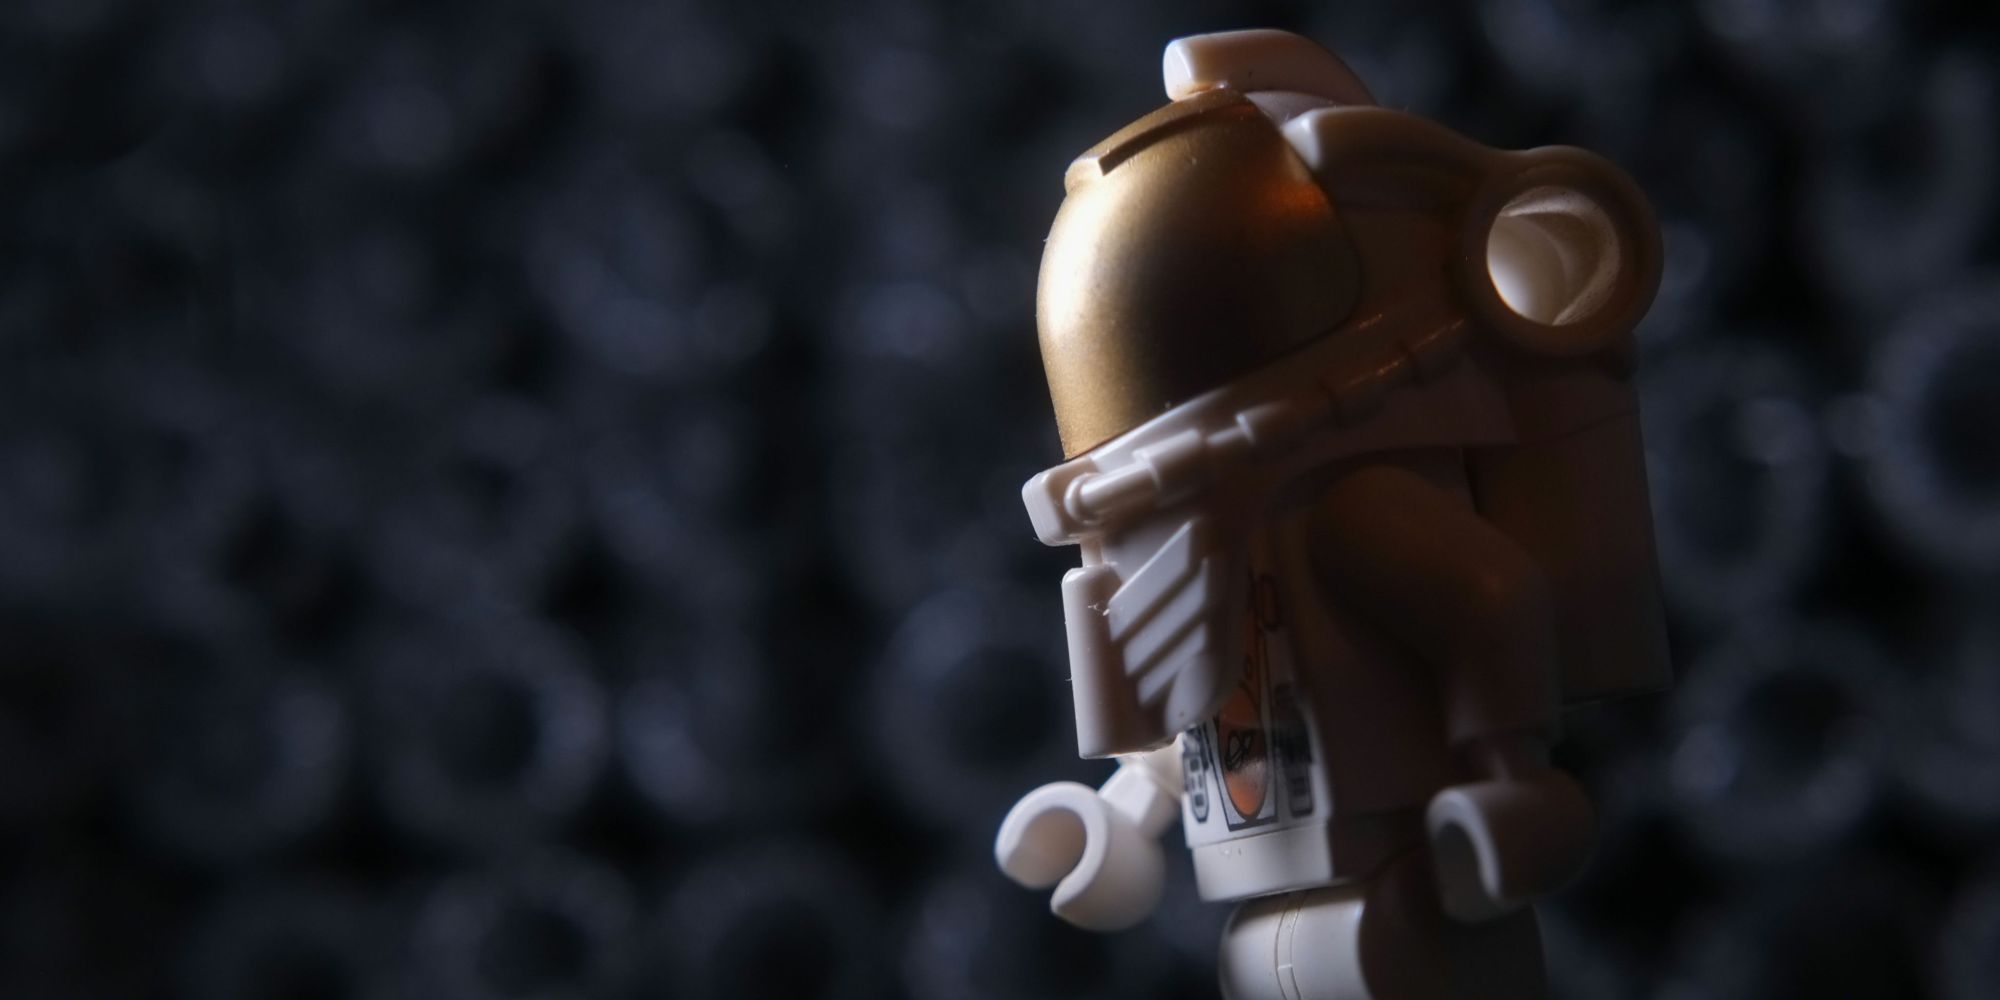 Lego astronaut minifigure close-up